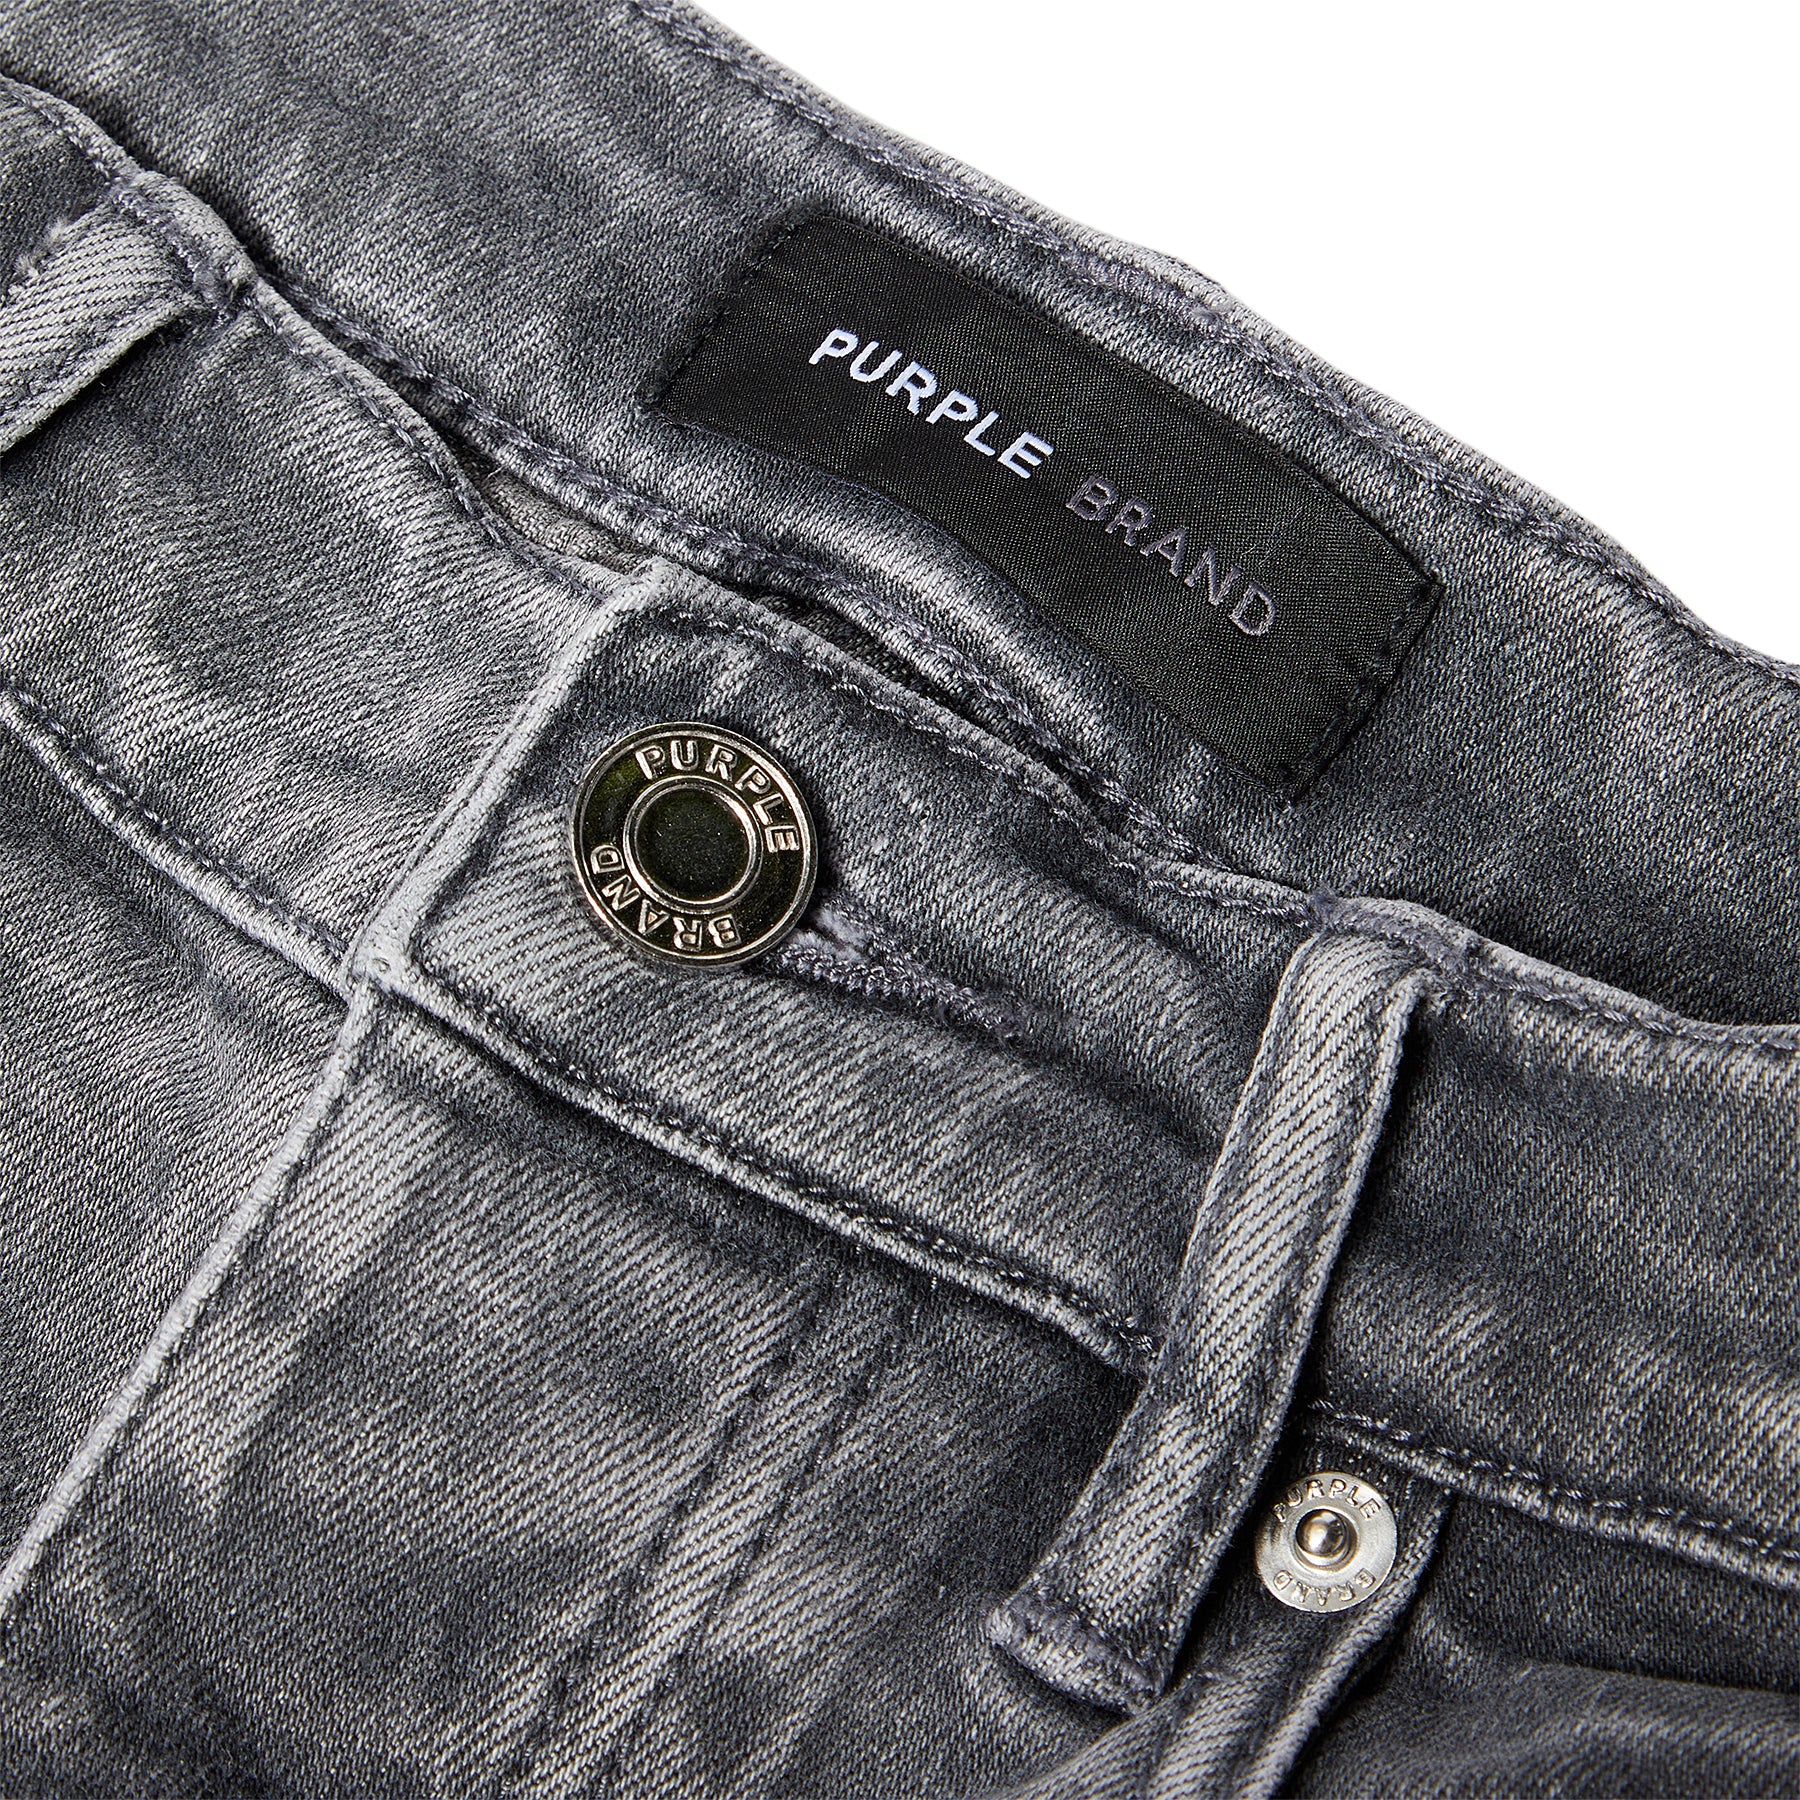 Purple brand Washed Denim Black Jeans Size 38